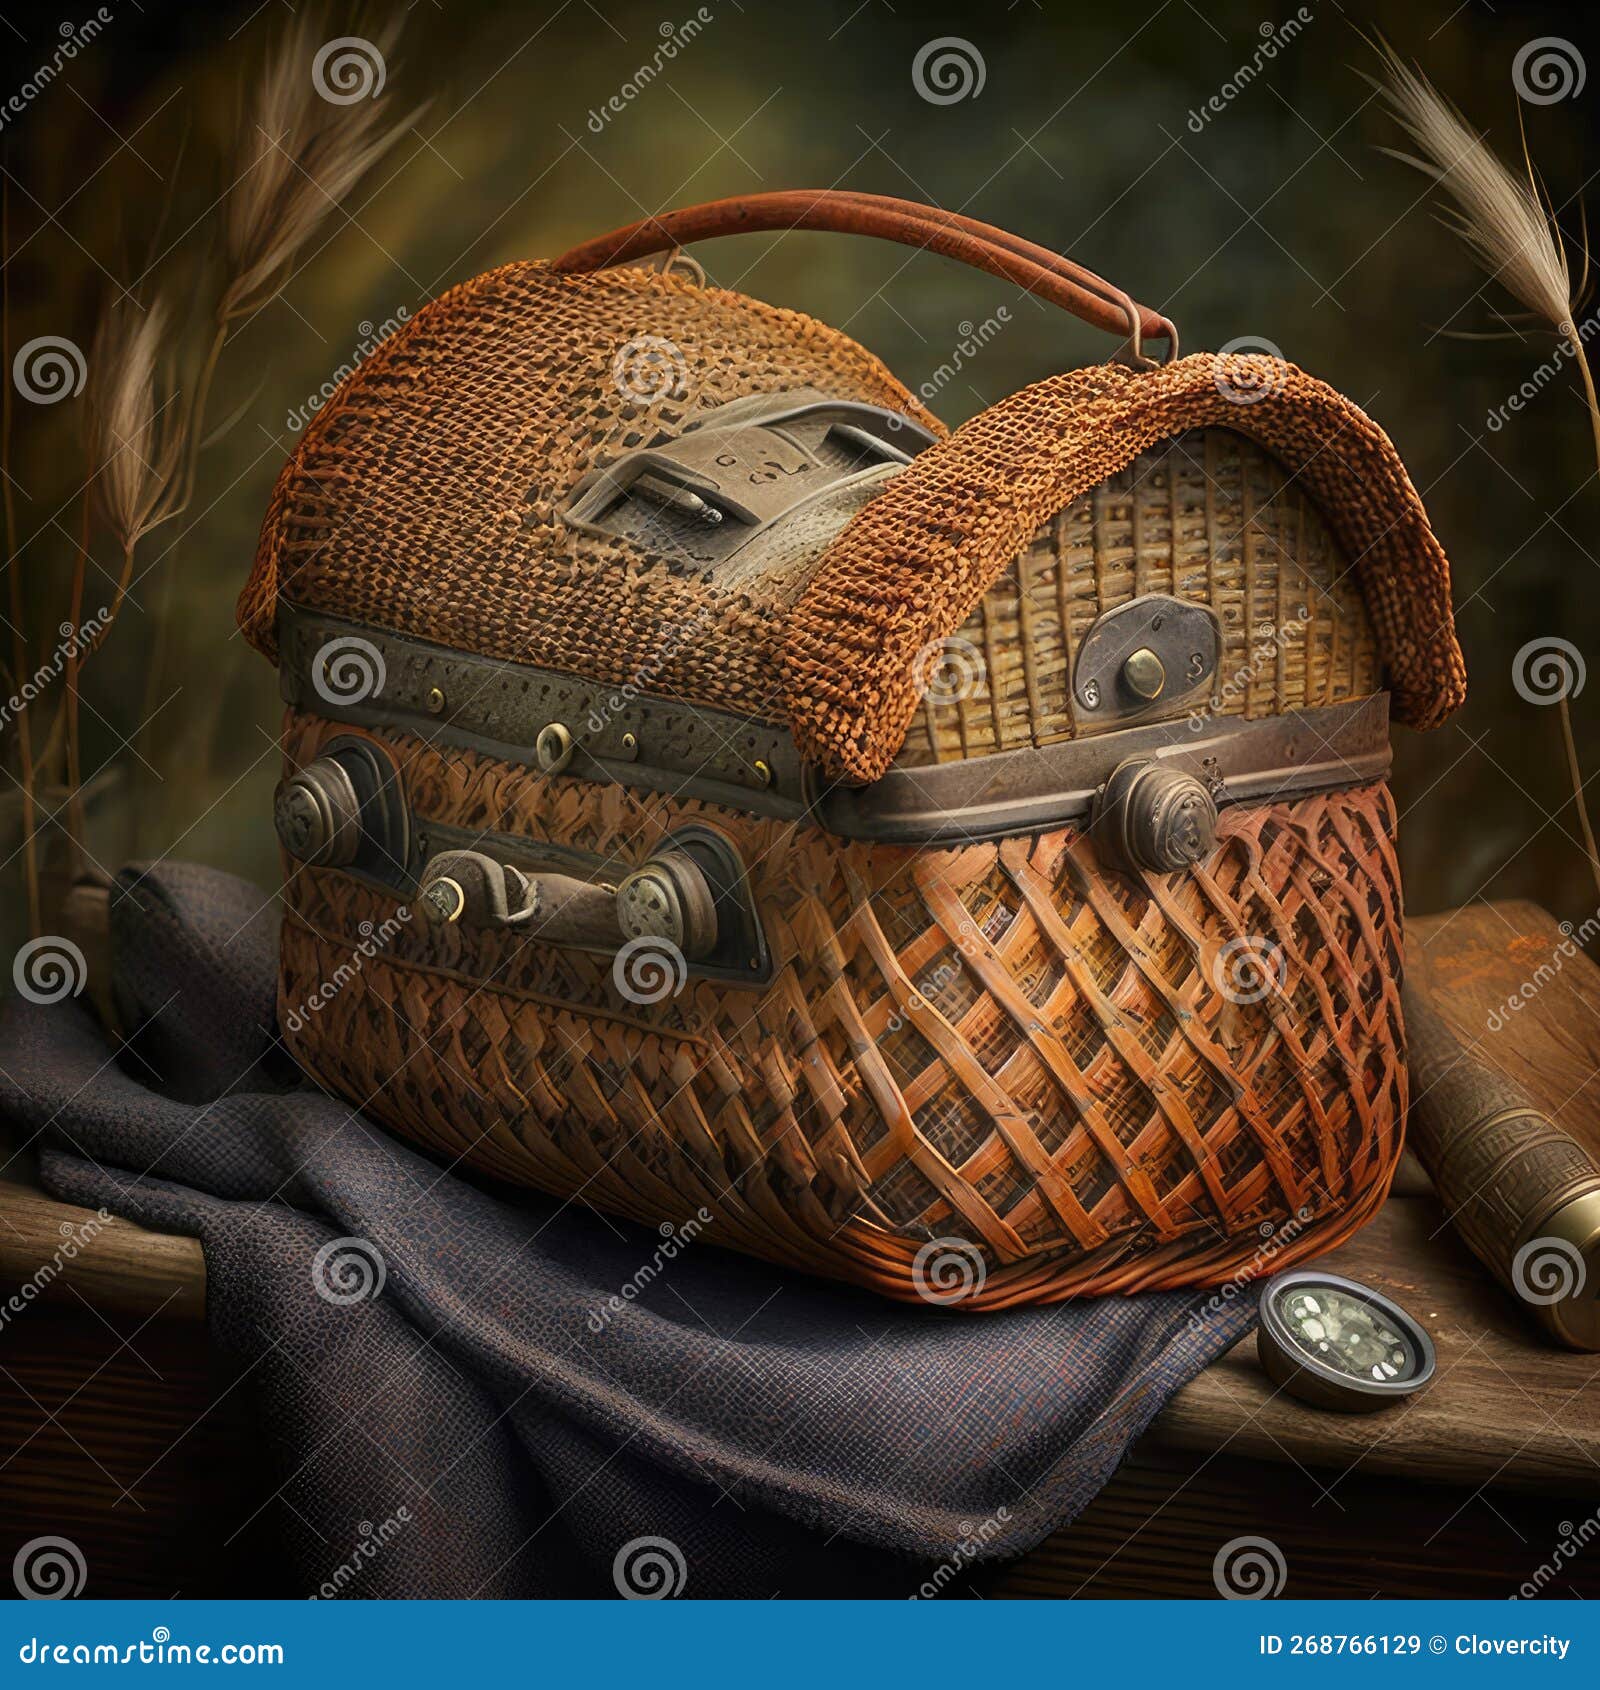 https://thumbs.dreamstime.com/z/old-fashion-vintage-wicker-basket-leather-fishing-creel-antique-illustration-268766129.jpg